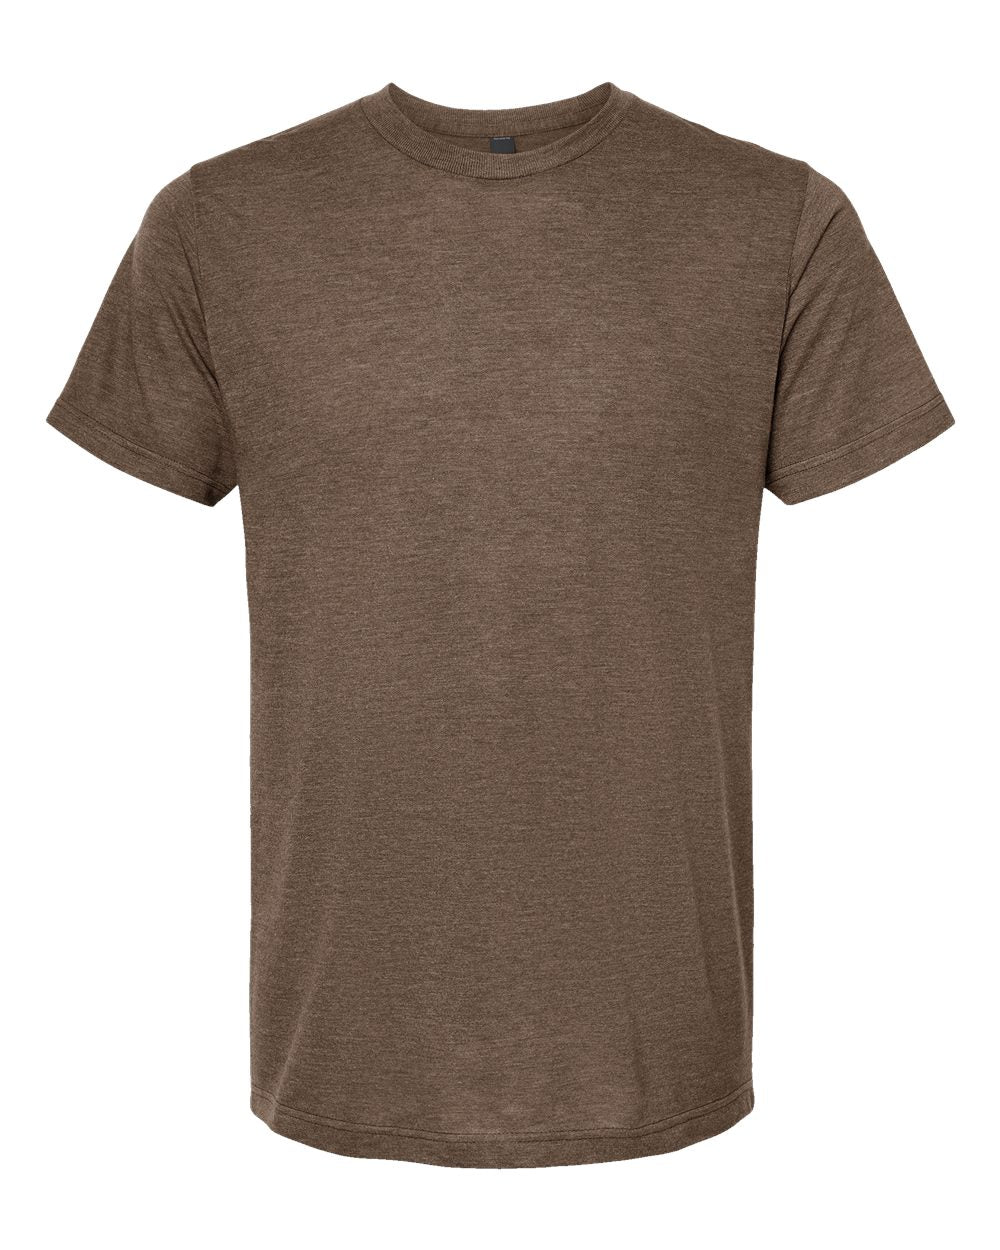 Tultex - Unisex Tri-Blend T-Shirt - 254